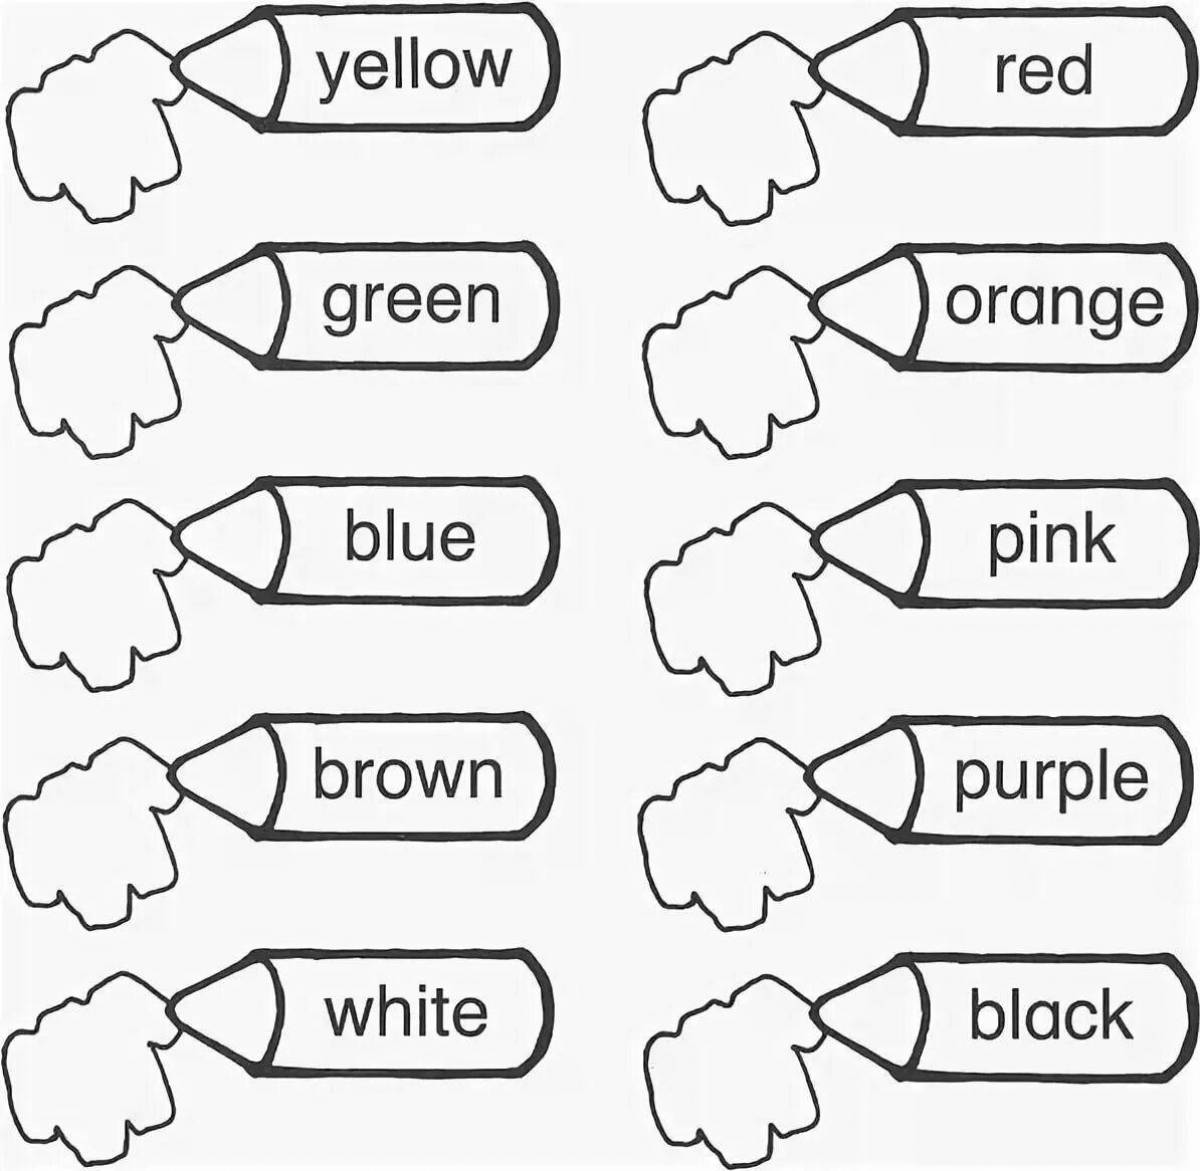 Creative coloring language for preschoolers